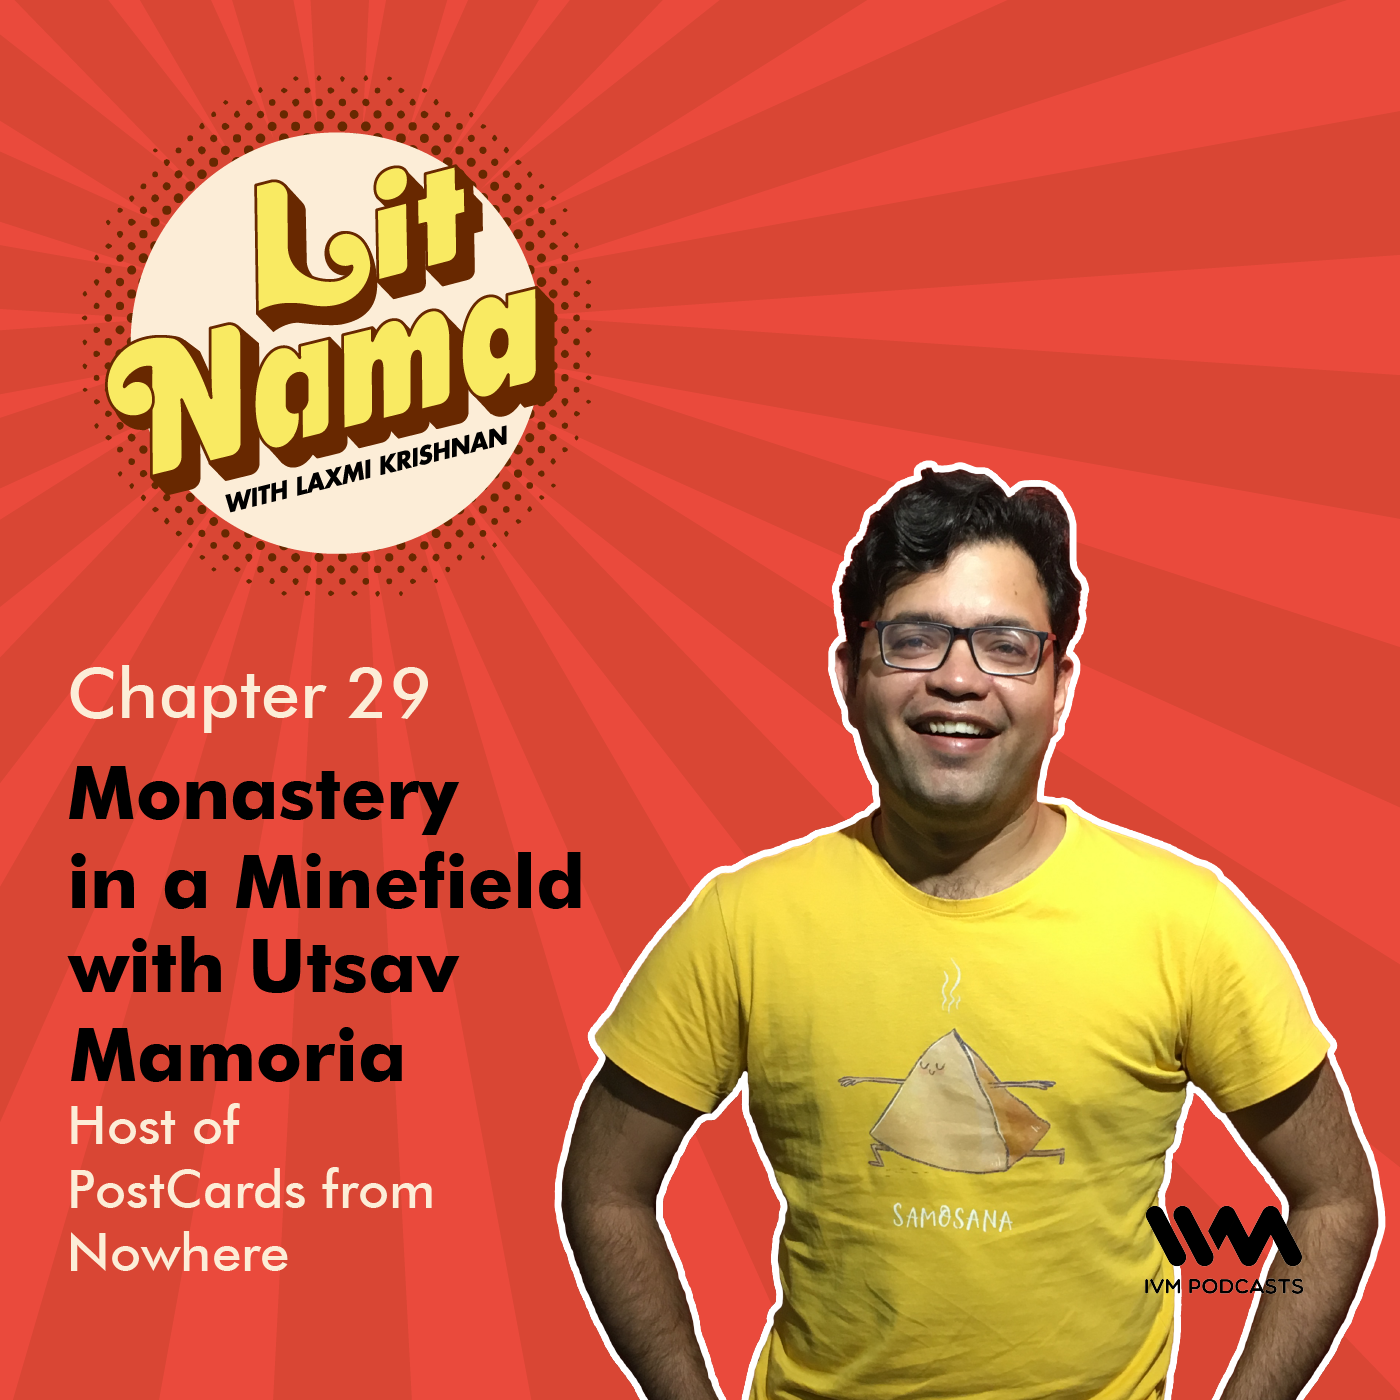 Chapter. 29: Monastery in a Minefield with Utsav Mamoria